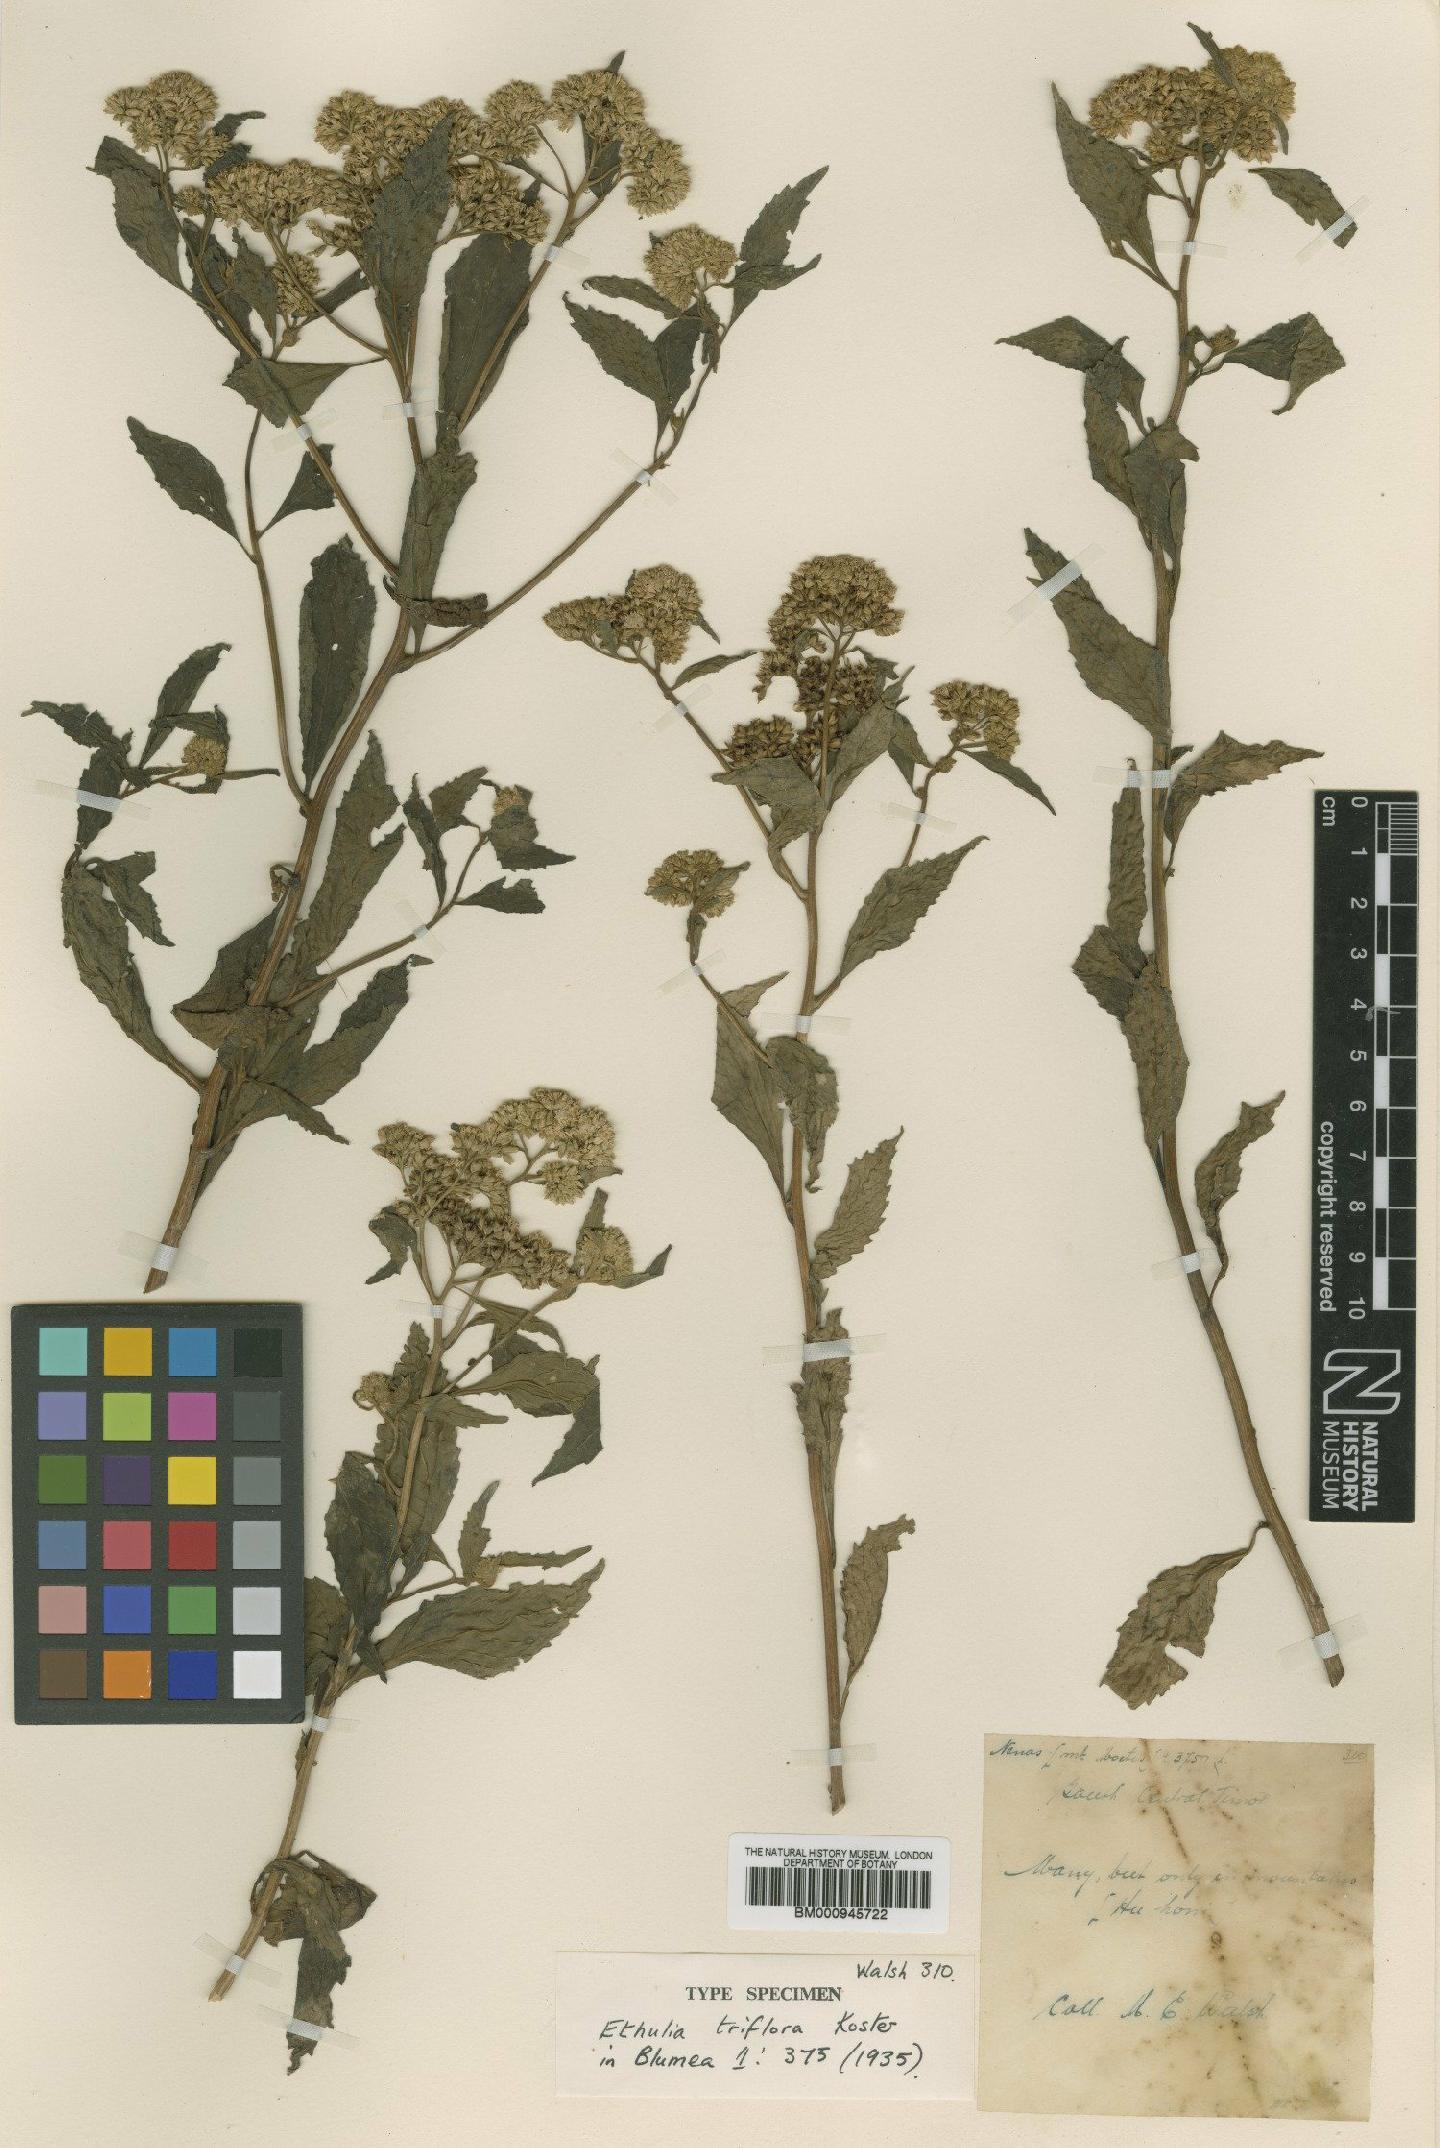 To NHMUK collection (Ethulia triflora Koster; Type; NHMUK:ecatalogue:3742)